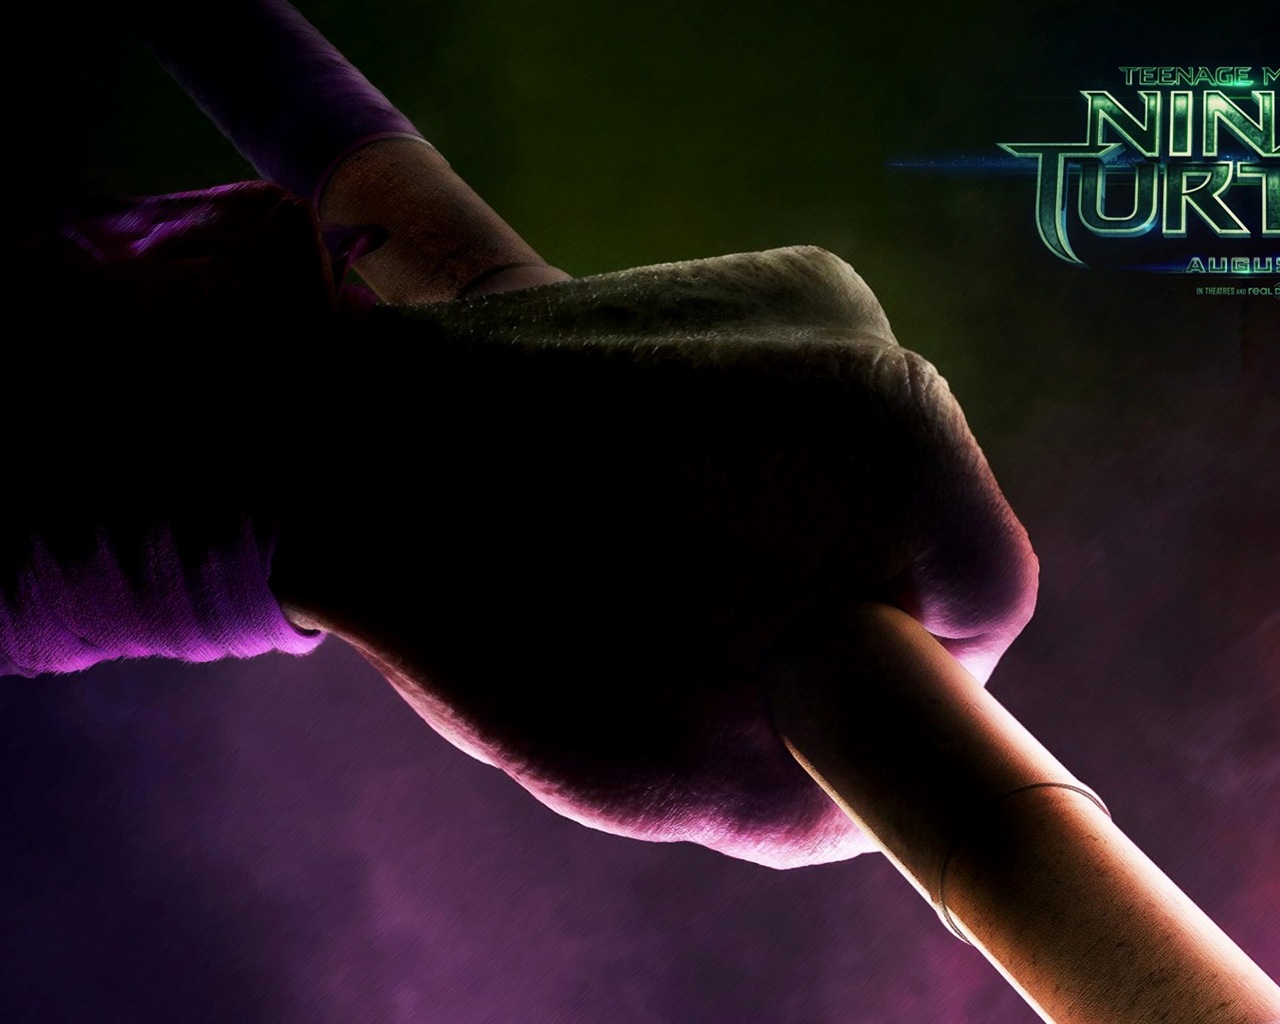 2014 Teenage Mutant Ninja Turtles HD movie wallpapers #6 - 1280x1024